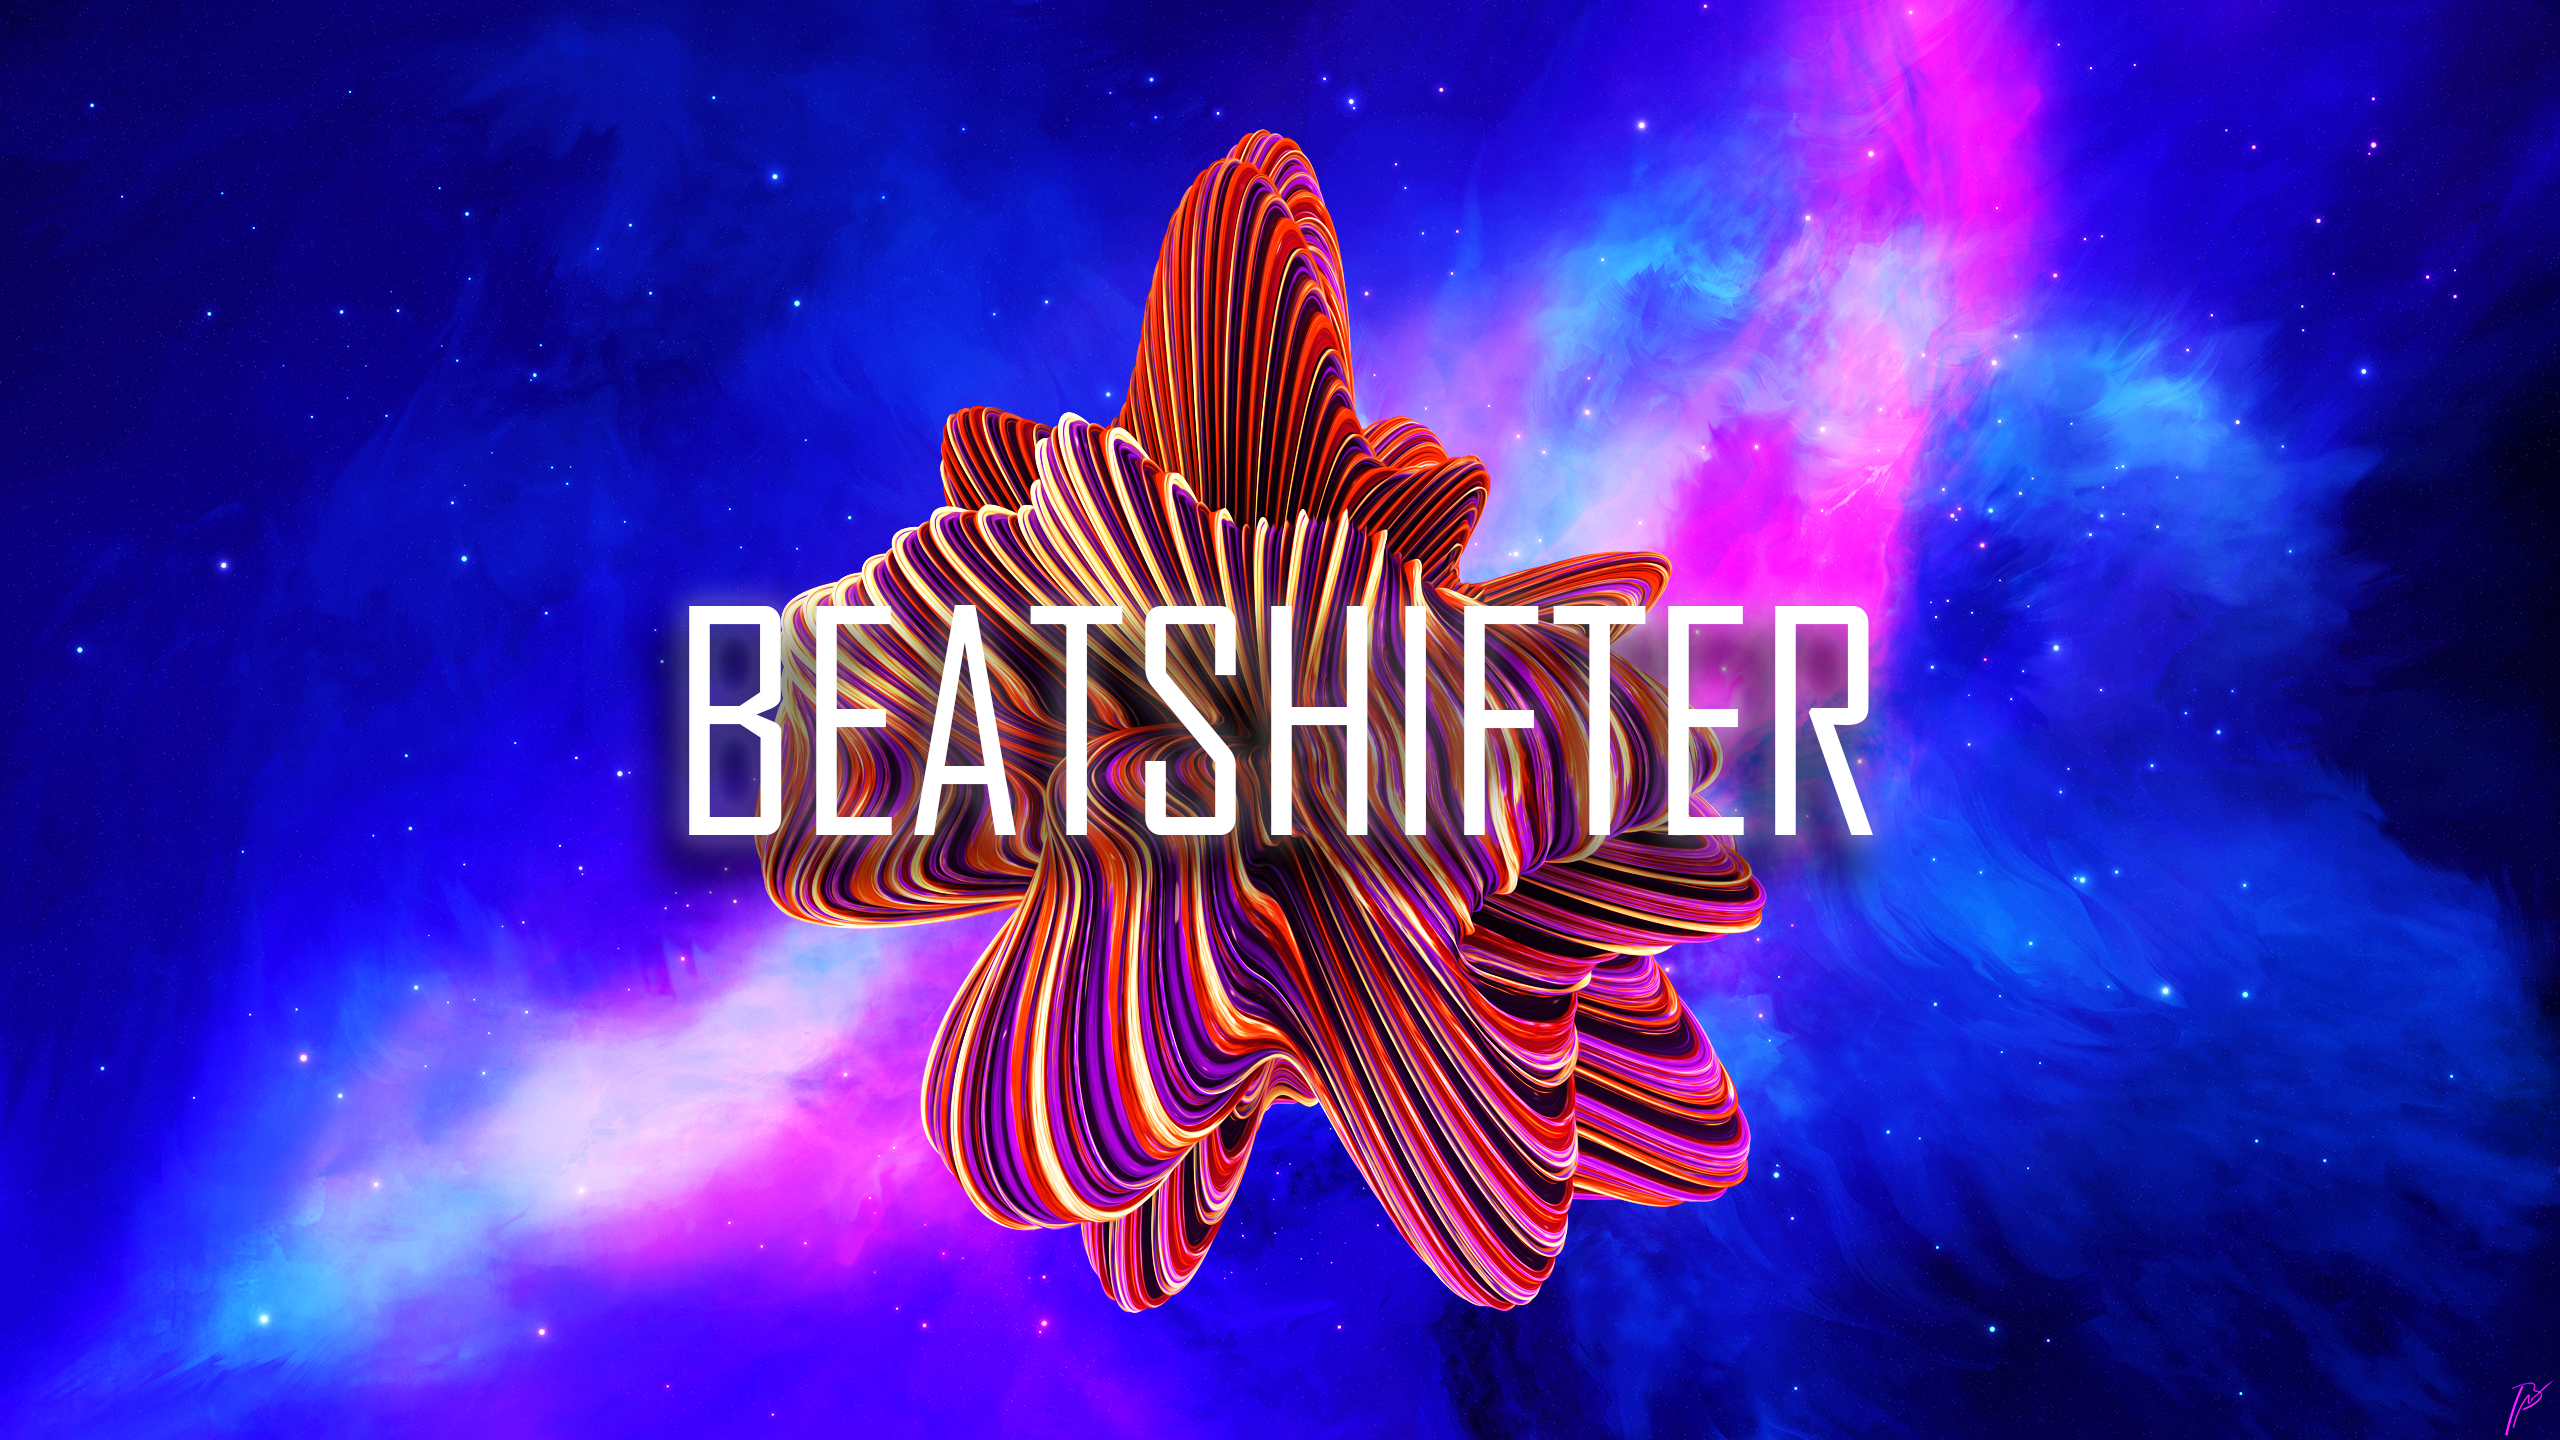 Beatshifter